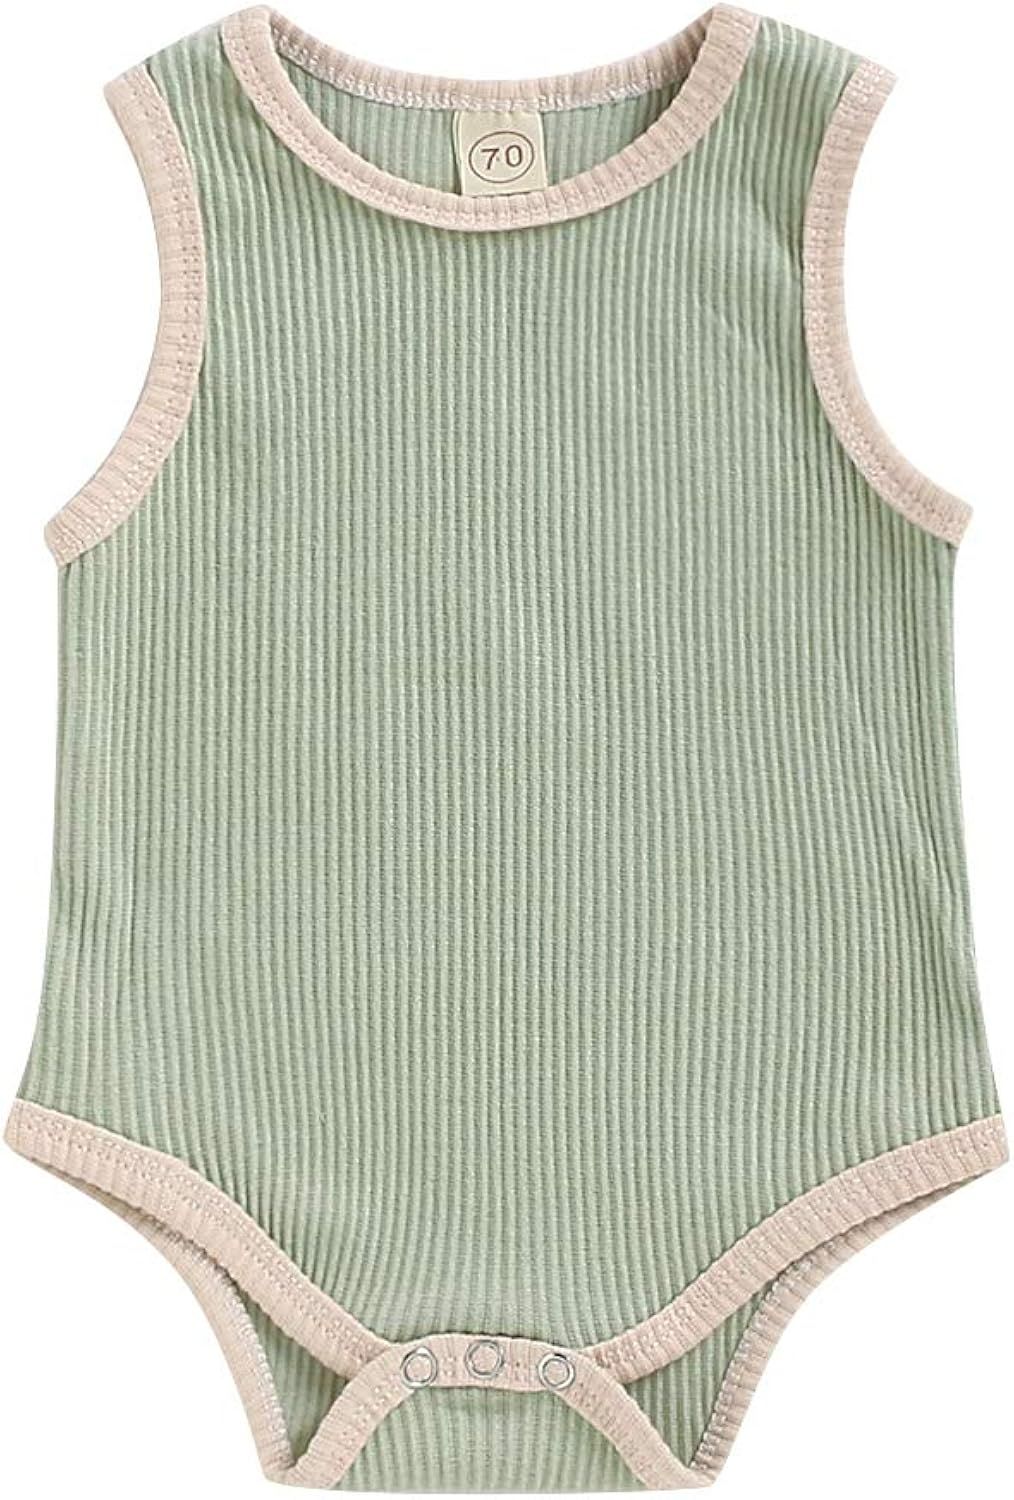 Aweyoo Newborn Baby Girl Bodysuits Long Sleeve Romper One-Piece Onesies Infant Toddler Girls Fall... | Amazon (US)